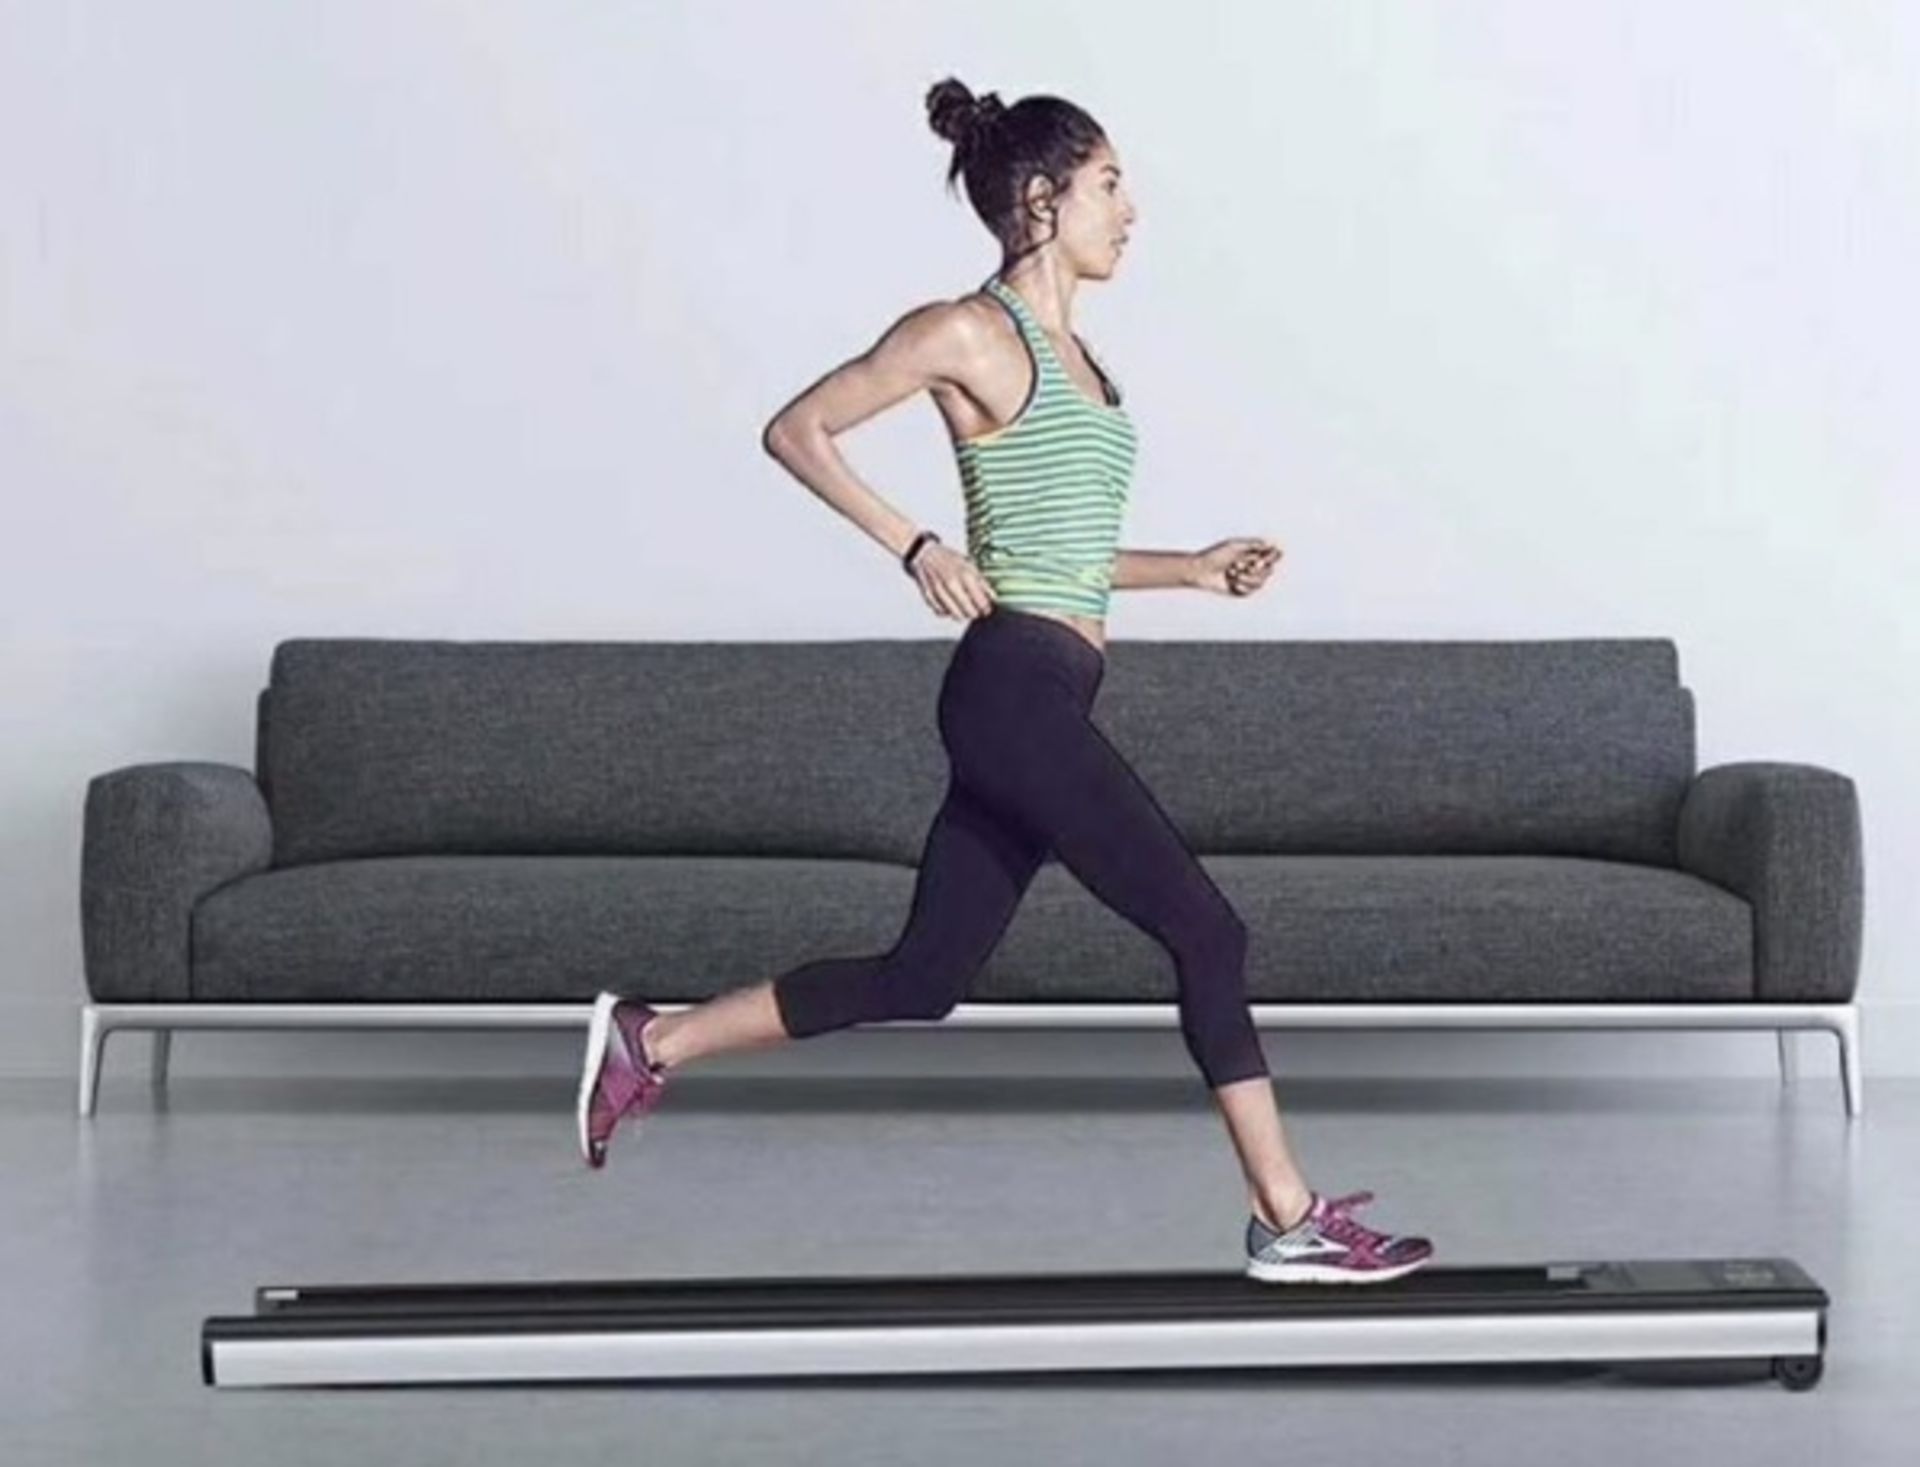 1 x Slim Tread Ultra Thin Smart Treadmill Running / Walking Machine - Lightweight With Folding - Image 7 of 8